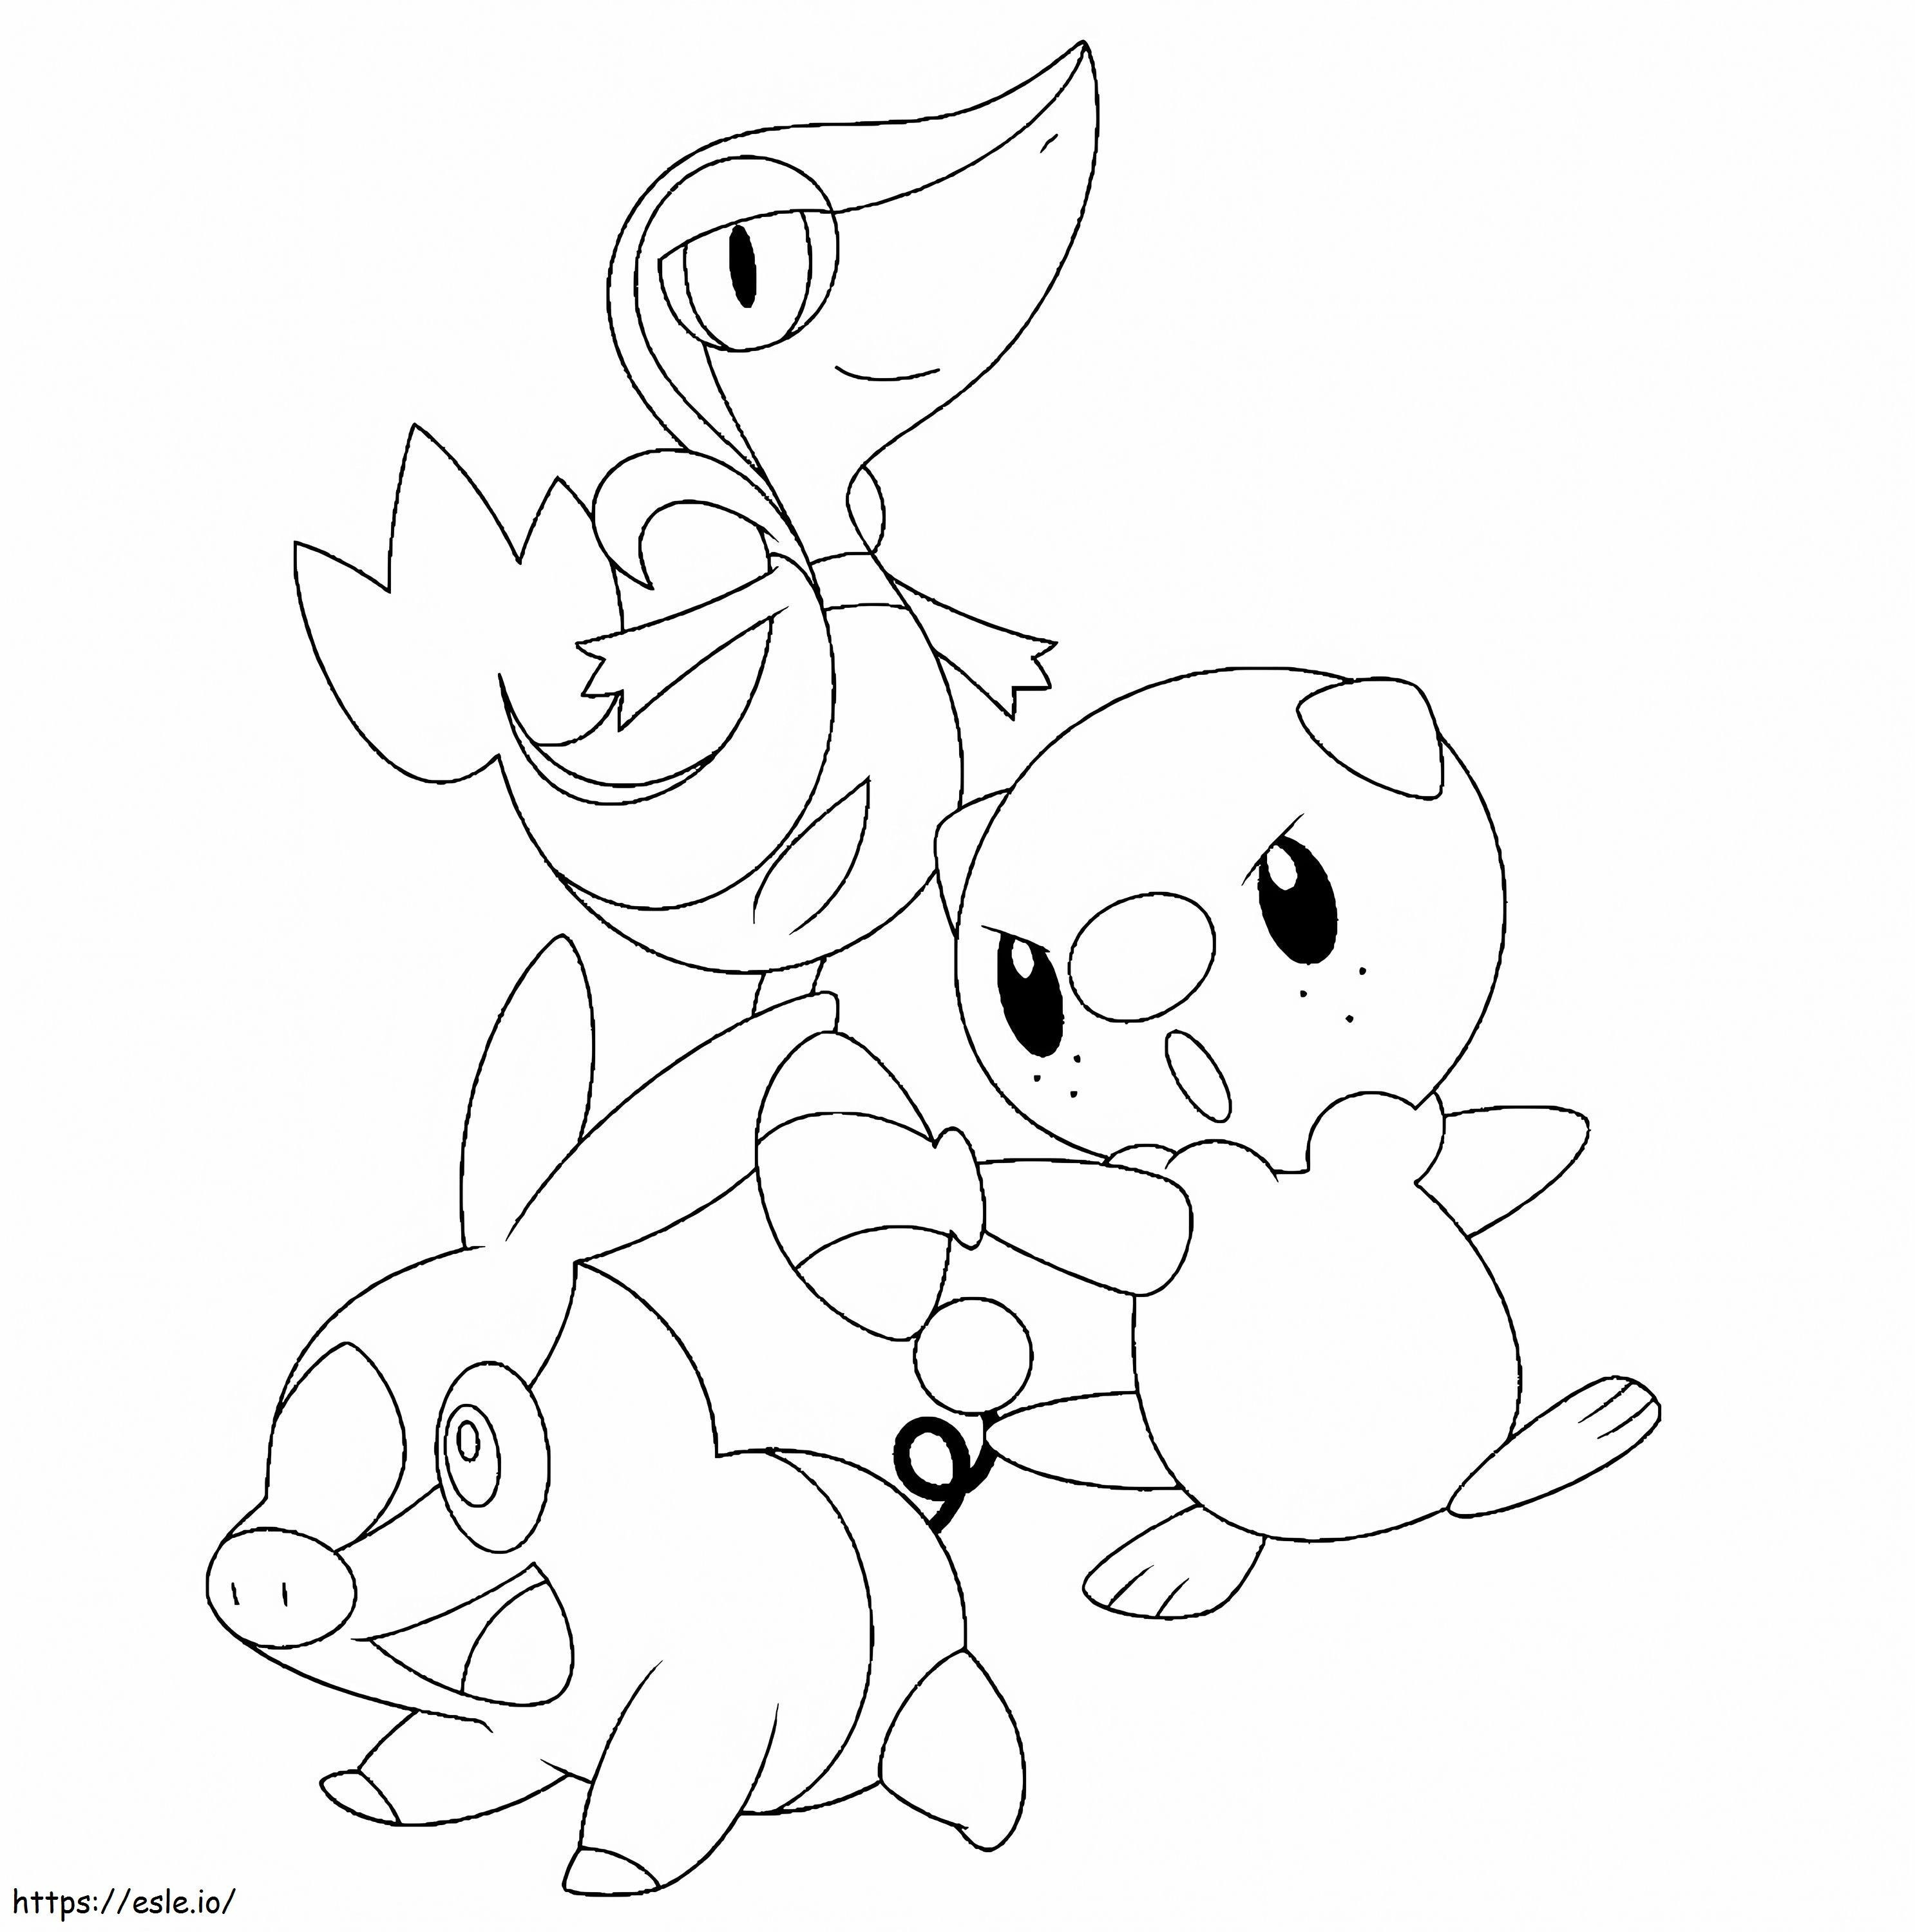 Coloriage Pokémon Tepig Snivy Oshawott à imprimer dessin